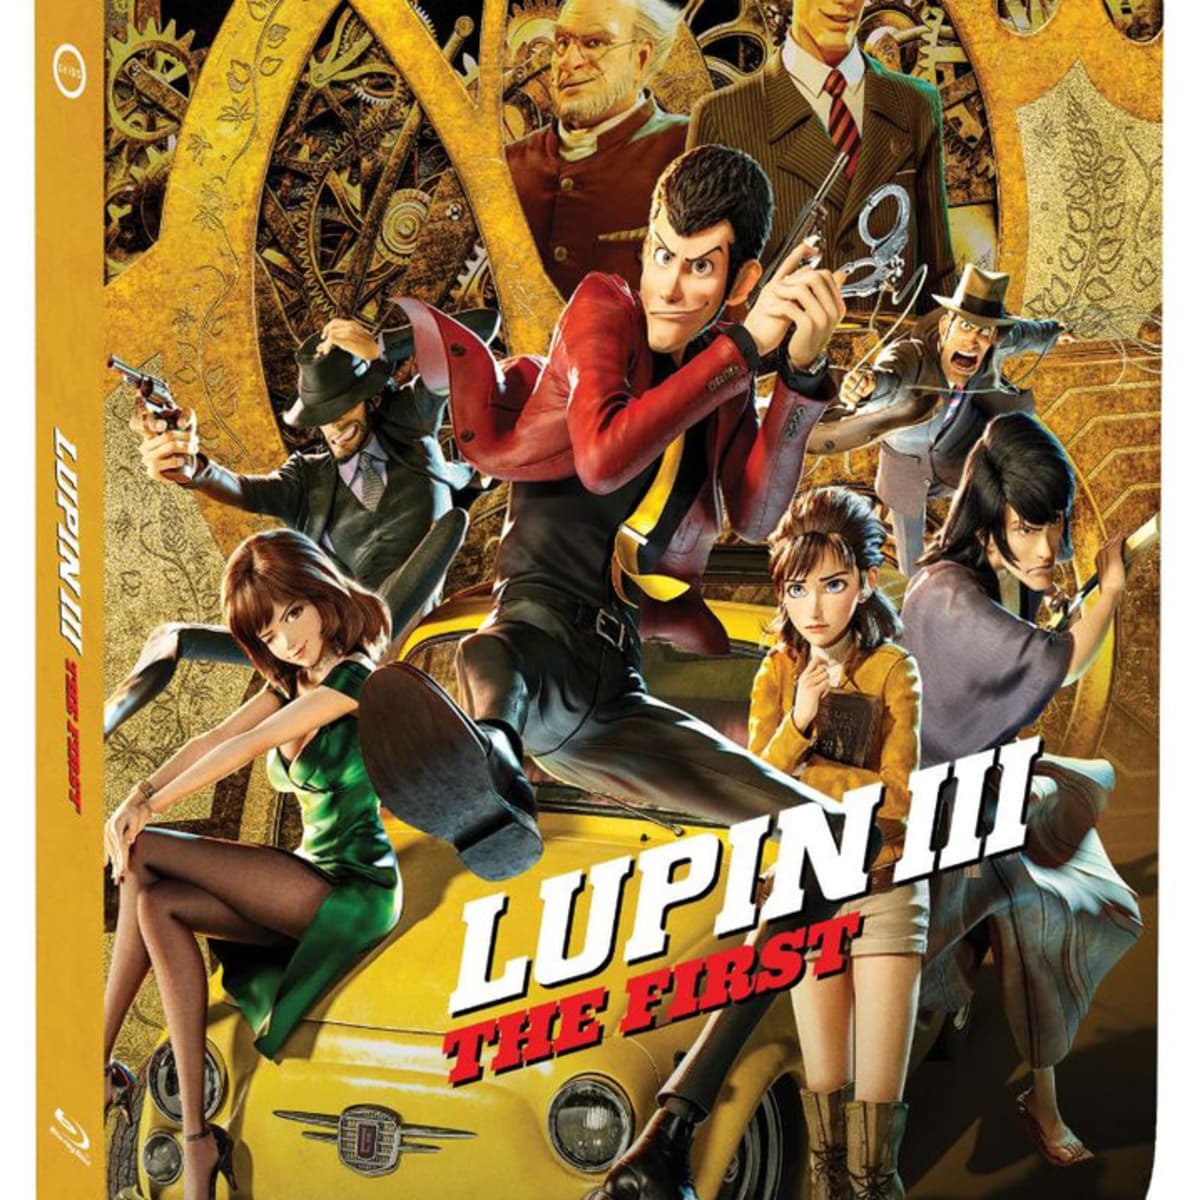 Lupin The III Every Anime Series Ranked According To IMDb